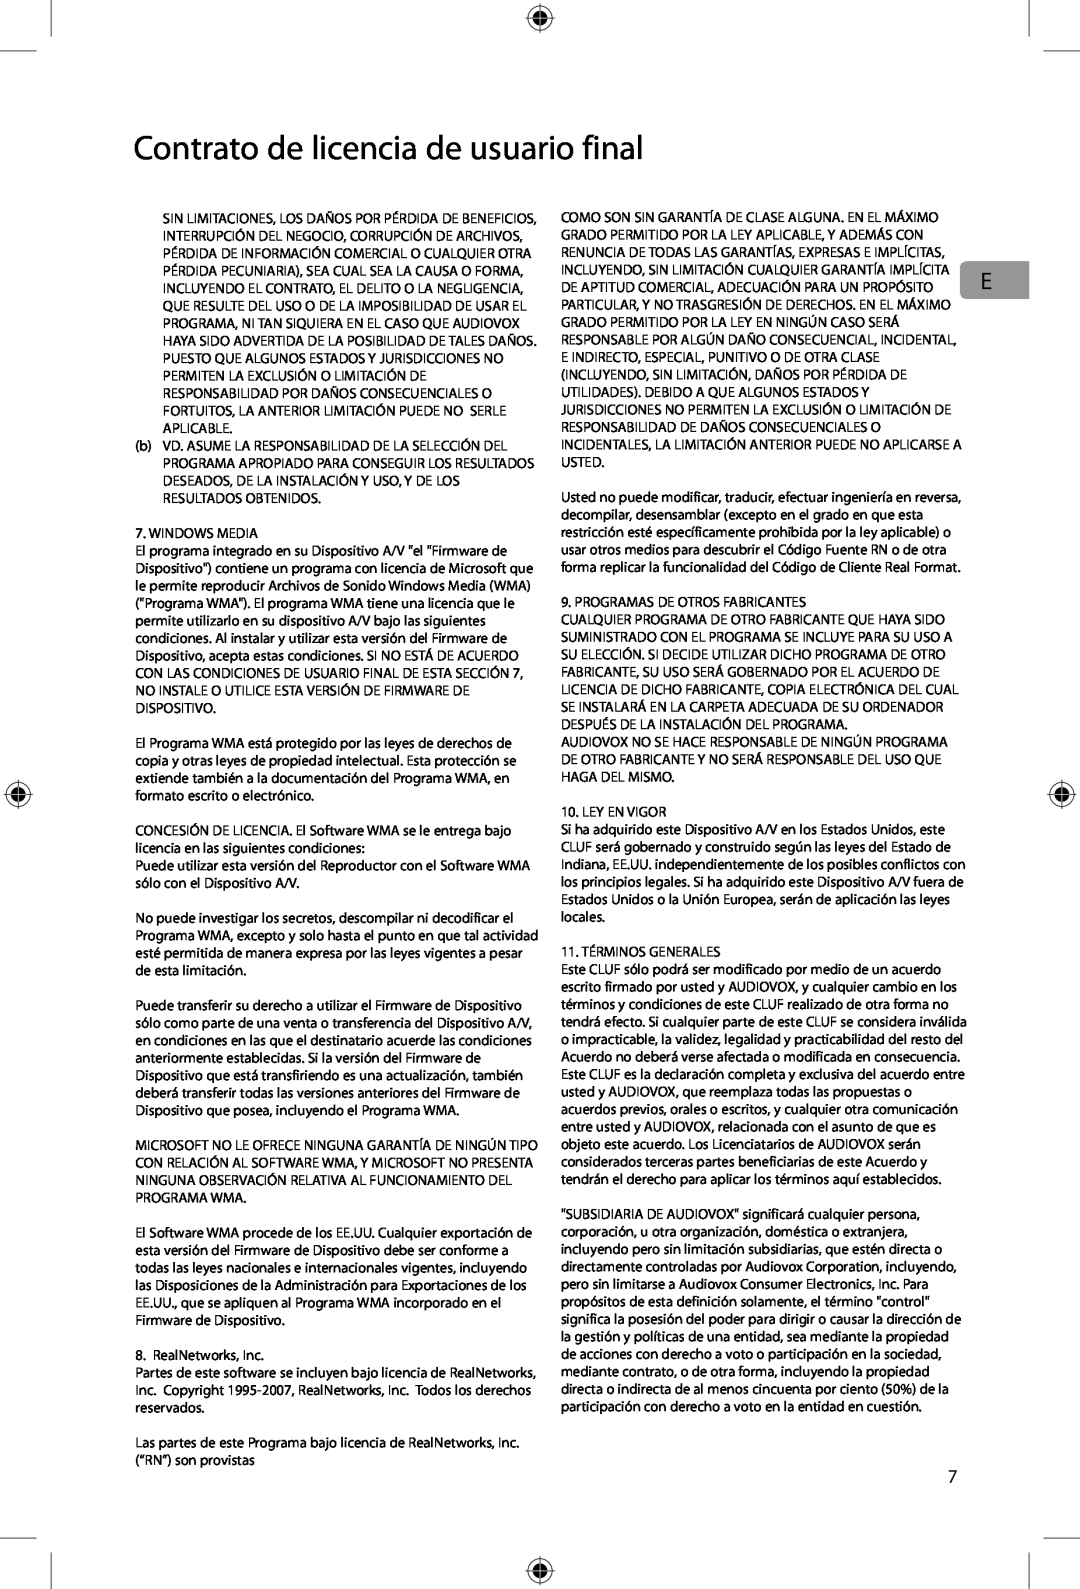 Acoustic Research ARIR200 user manual Contrato de licencia de usuario final, Windows Media 